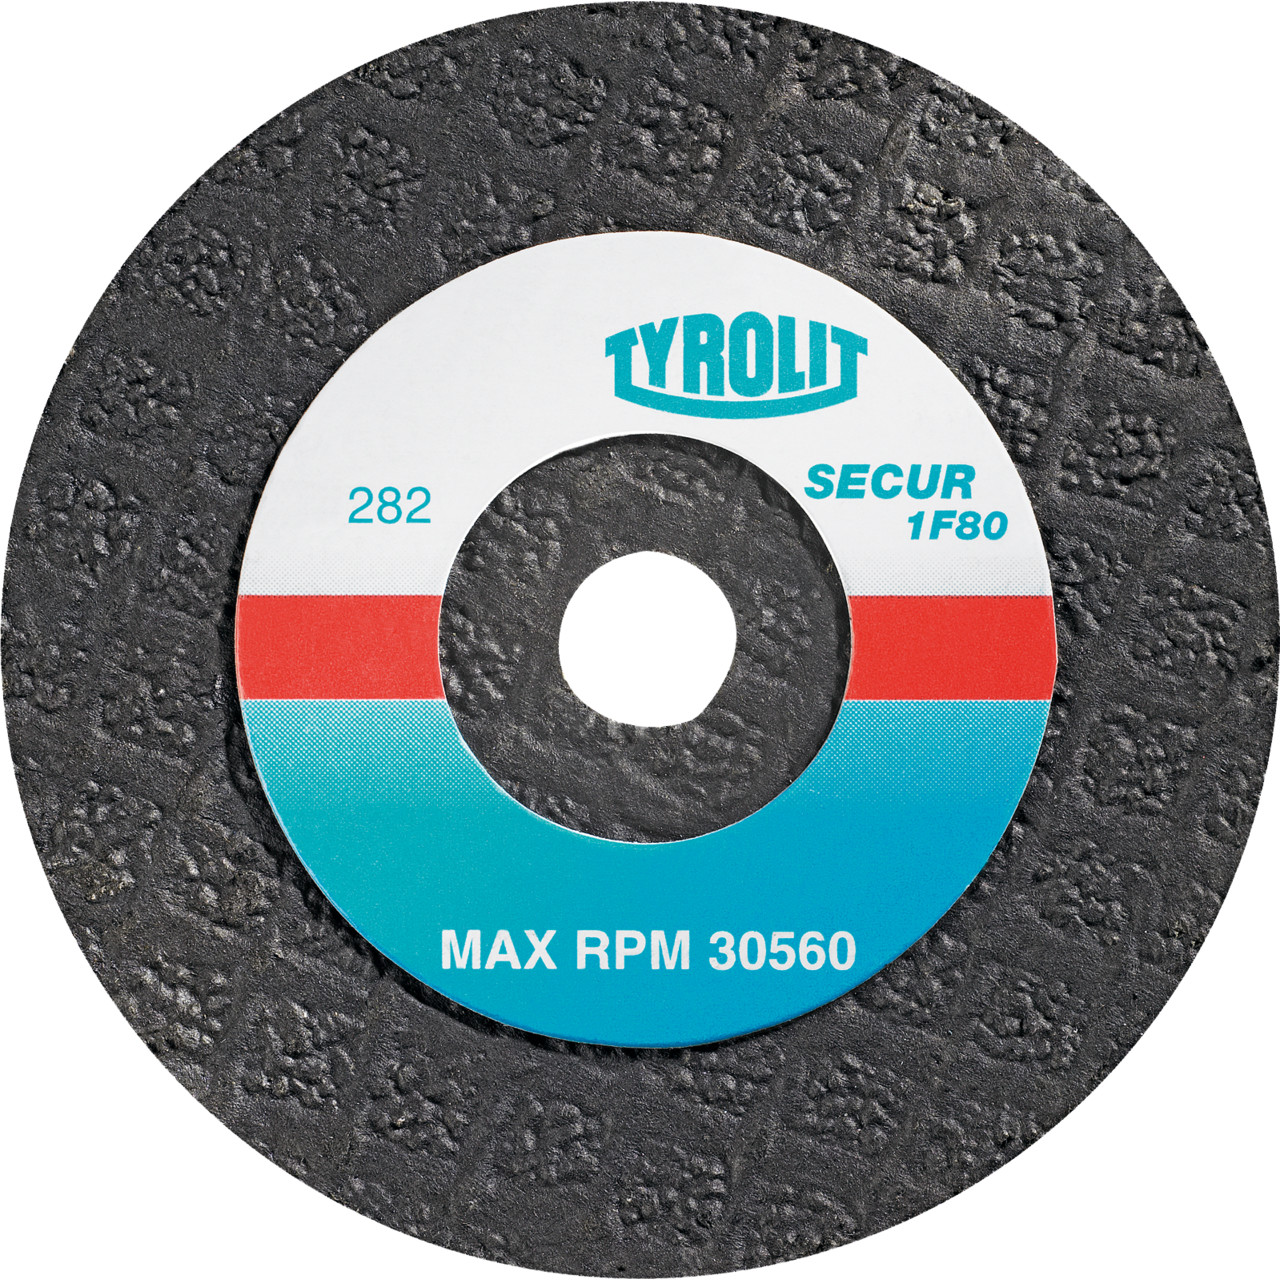 TYROLIT discos de desbaste DxDxH 50x10x10 1F80 para acero inoxidable, forma: 1F80 - versión recta (disco de desbaste), Art. 441206